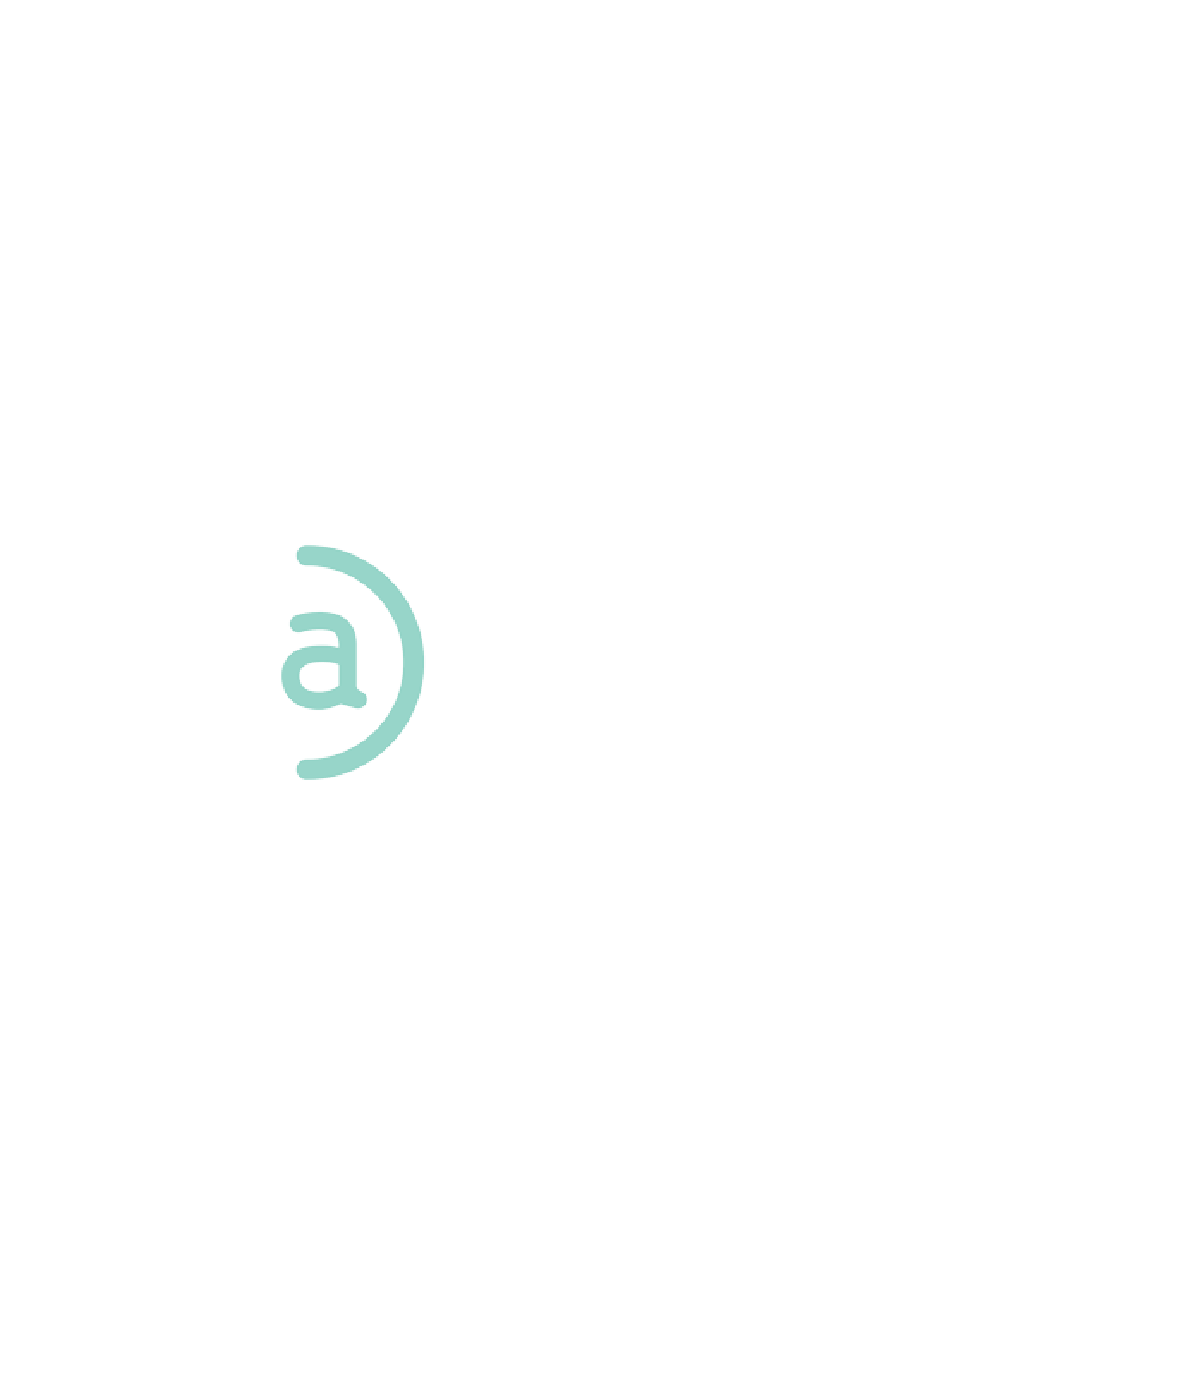 Ambidio